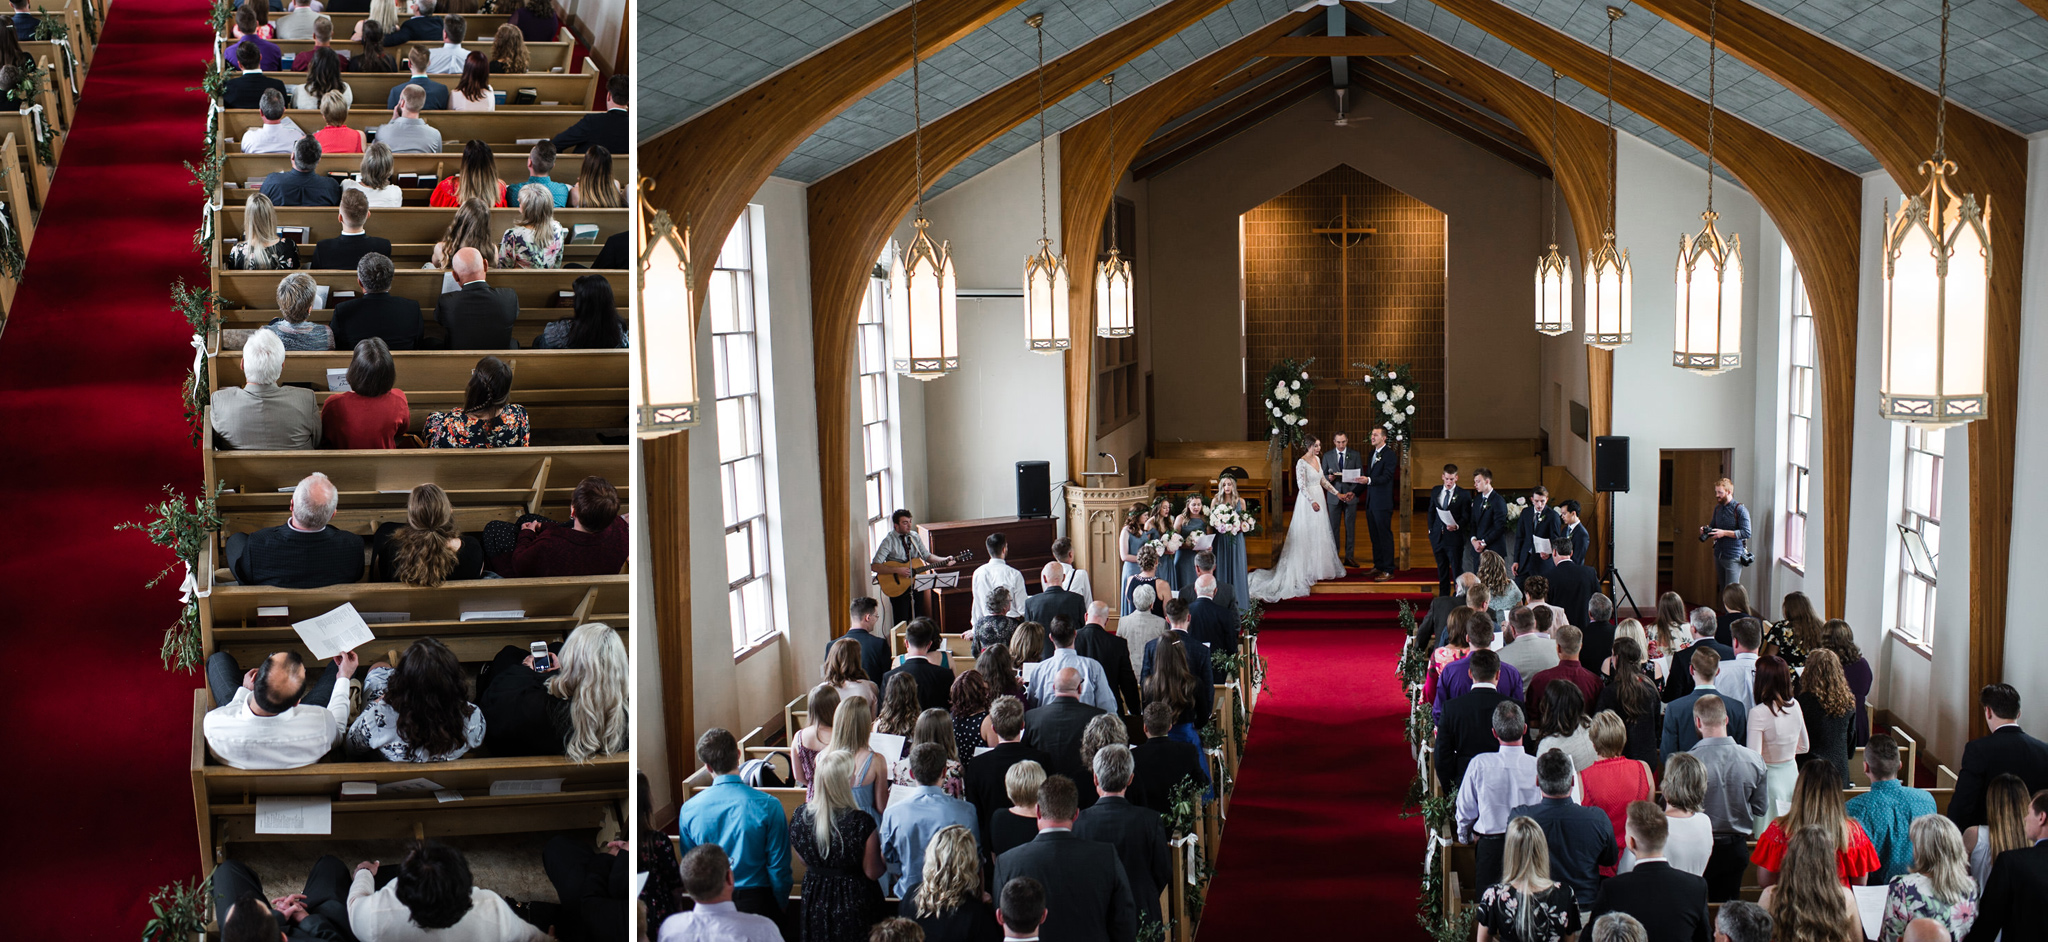 189-bride-groom-worship-toronto-church-wooden-arch-flowers.jpg